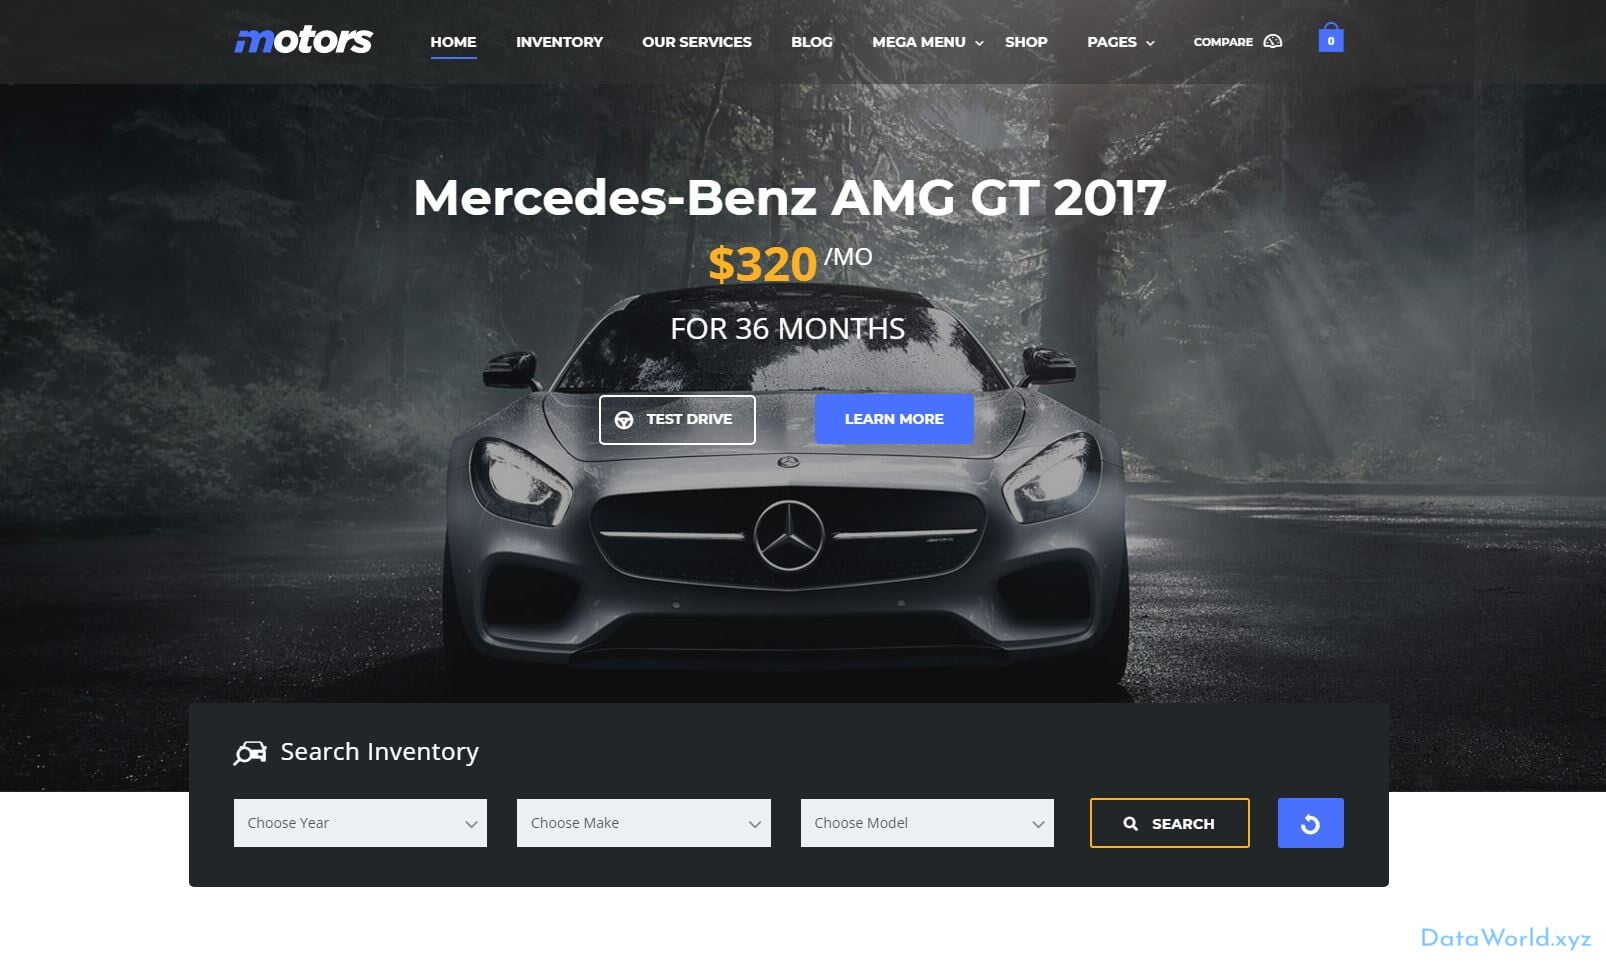 Motors - Car Dealer, Rental & Classifieds WordPress theme